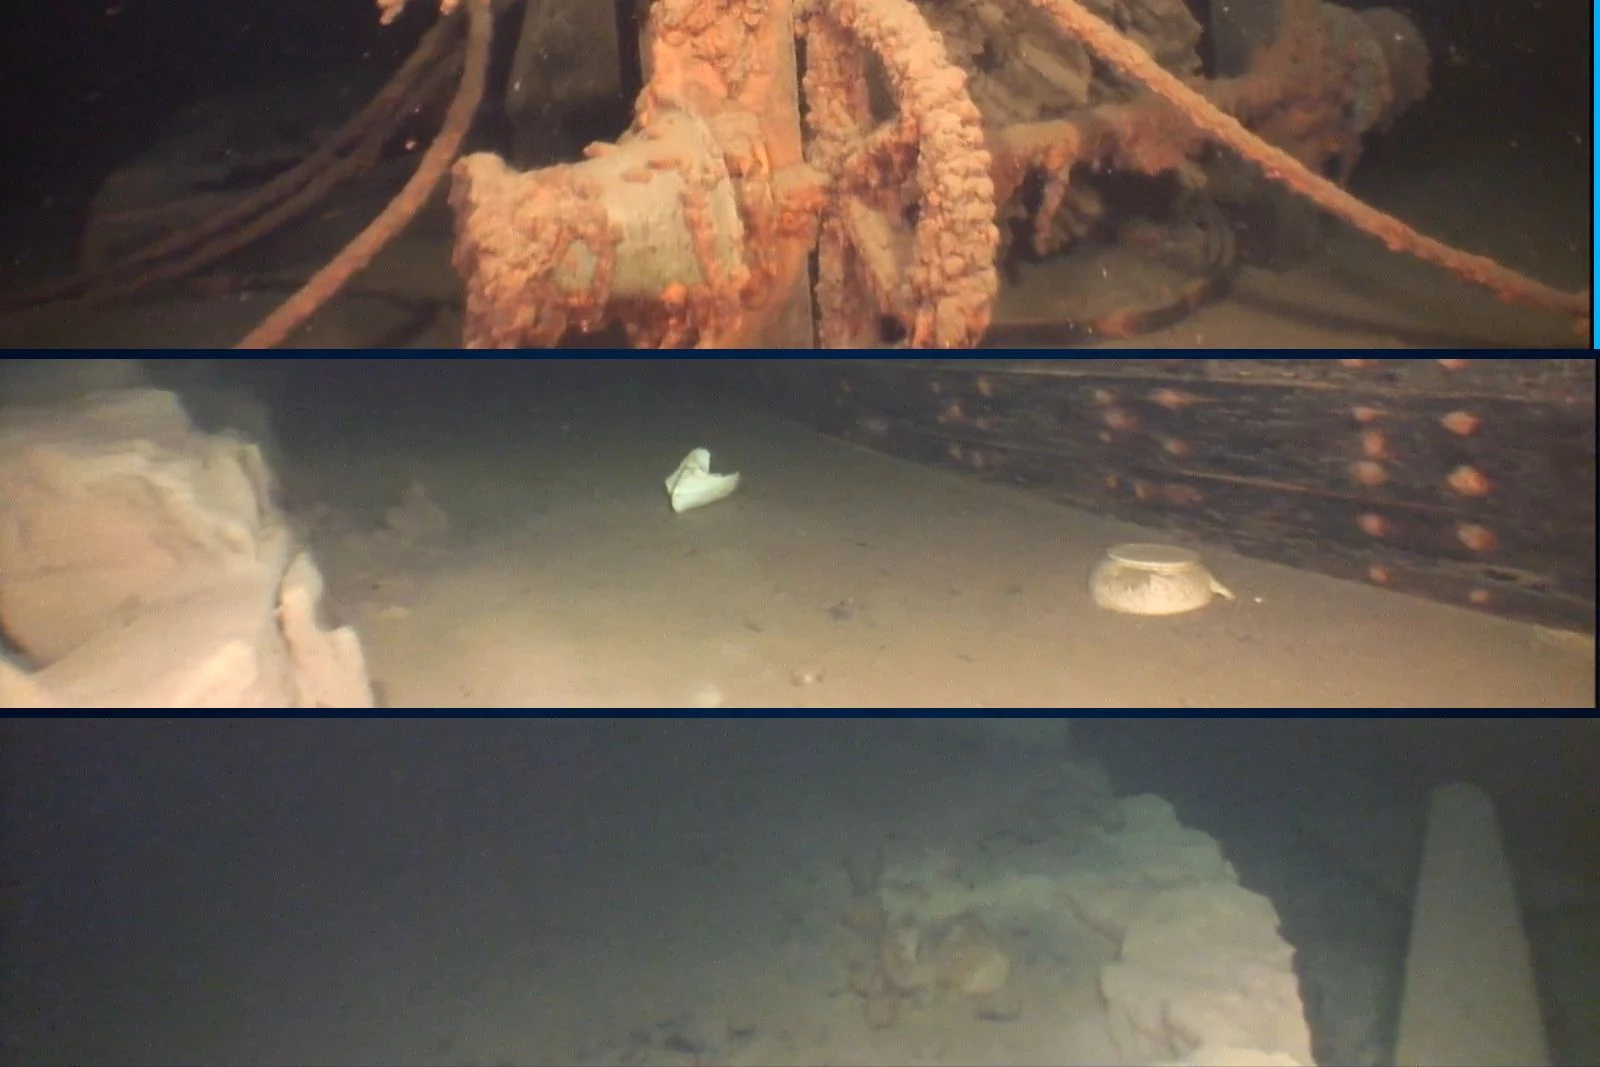 Adella Shores: Century Old Shipwreck Discovered in Lake Superior